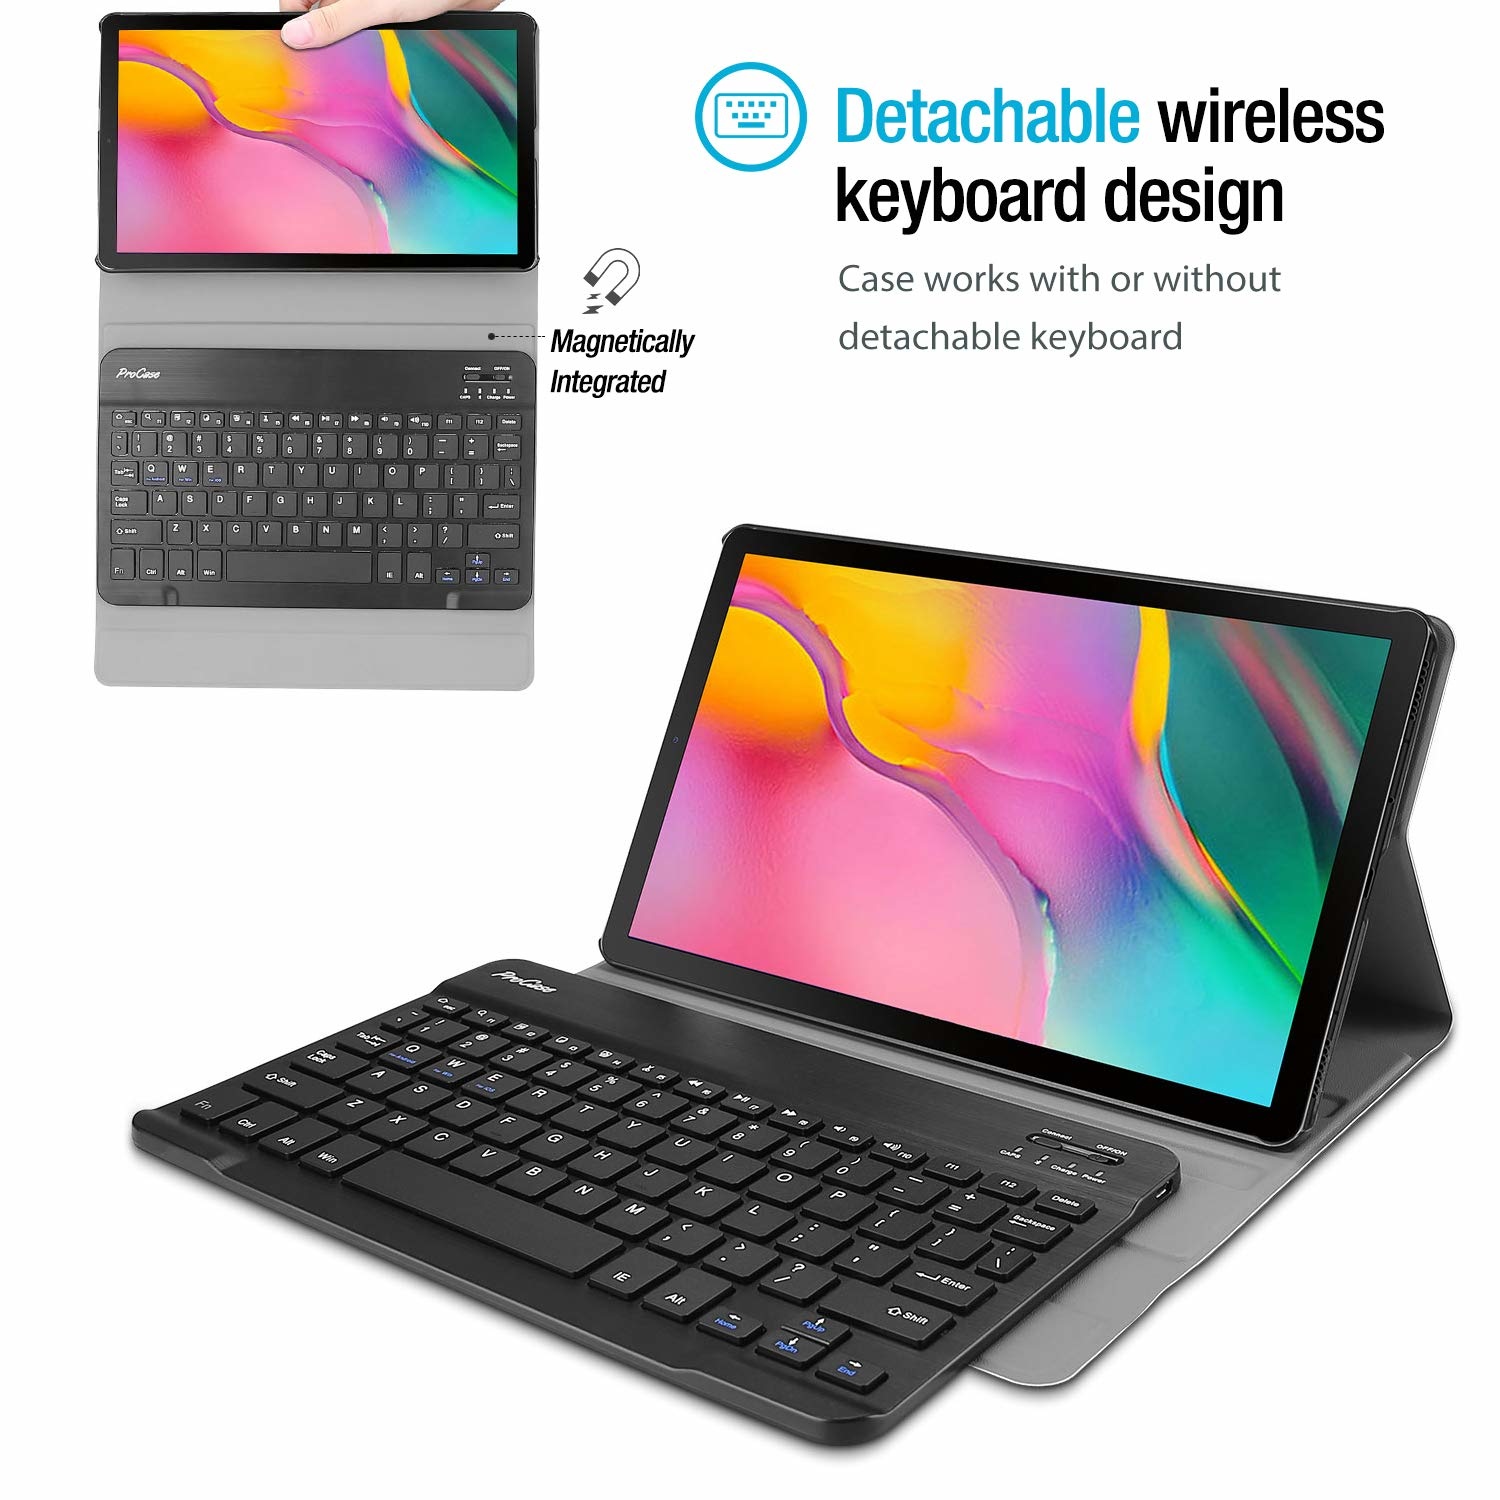 houder twintig Vooruitgang Samsung Galaxy Tab A 2019 - Bluetooth toetsenbord hoes + Screenprotect |  Case2go.nl